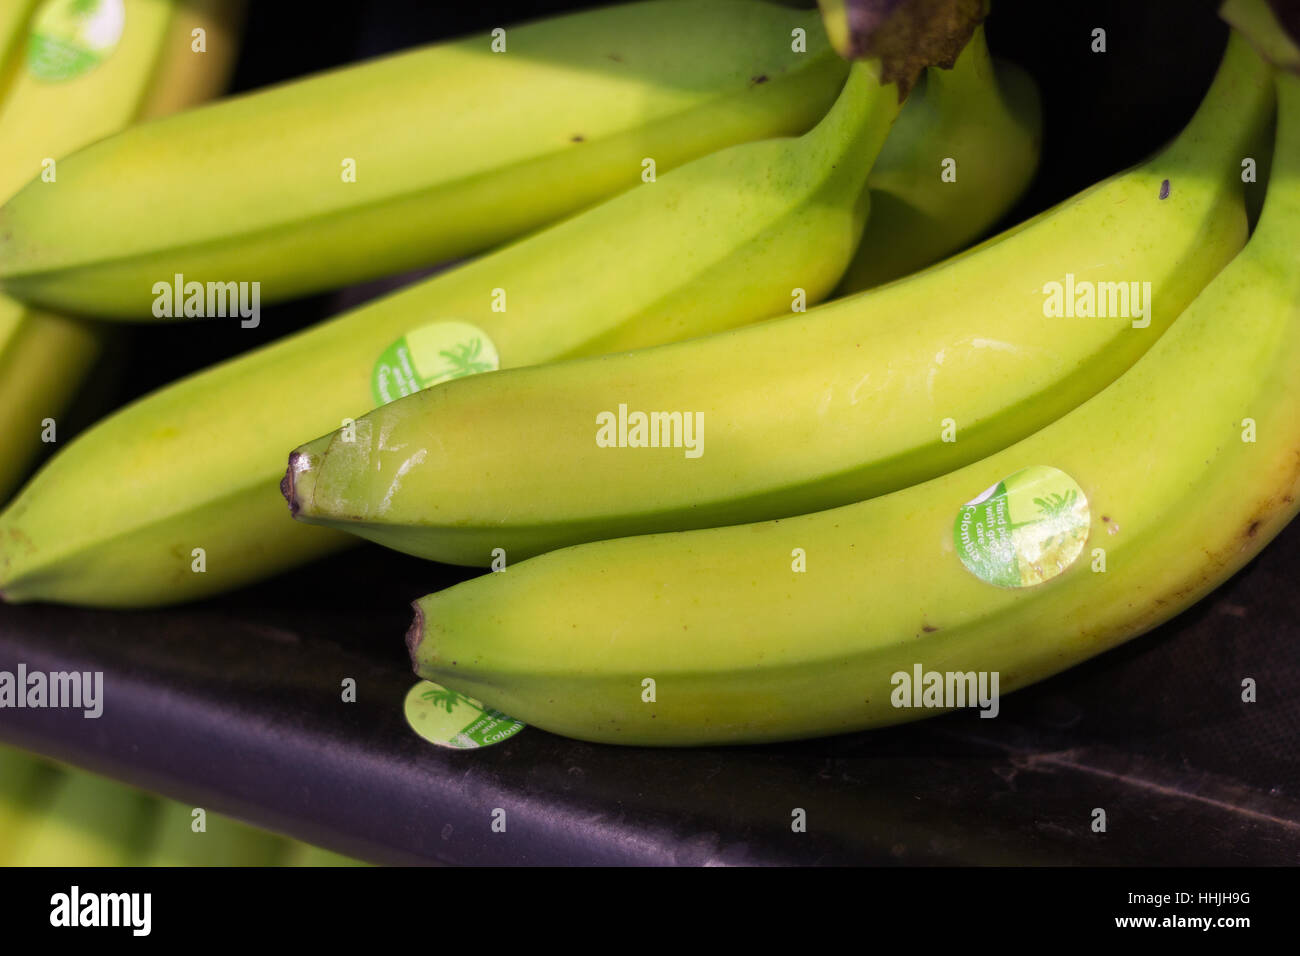 Bananas on sale on supermarket shelf Stock Photo